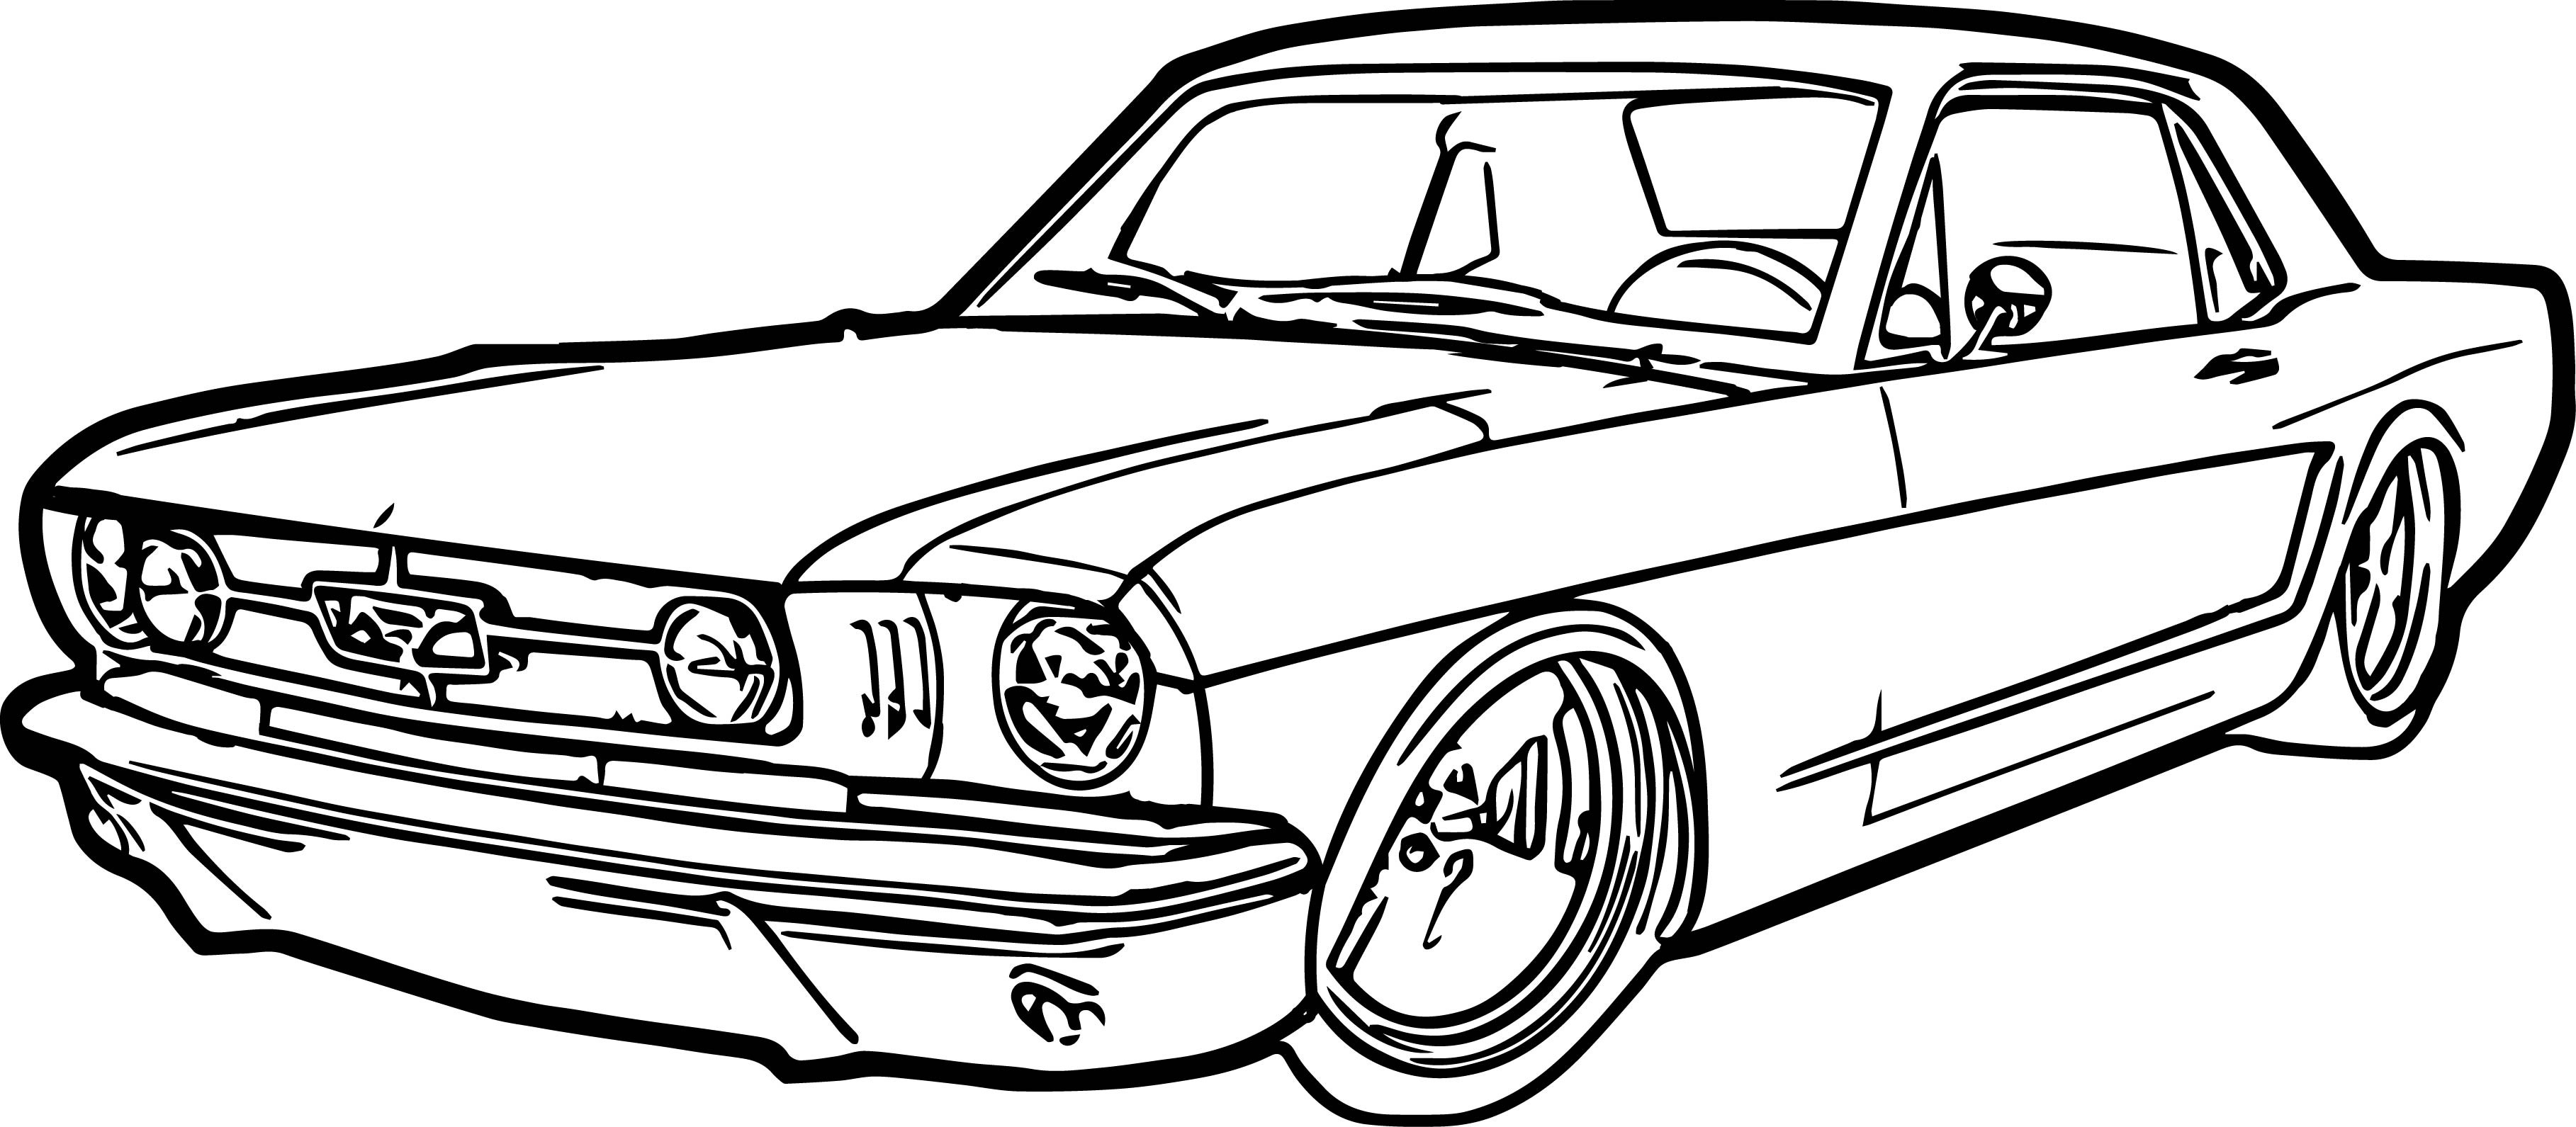 Nascar Car Drawing at GetDrawings | Free download